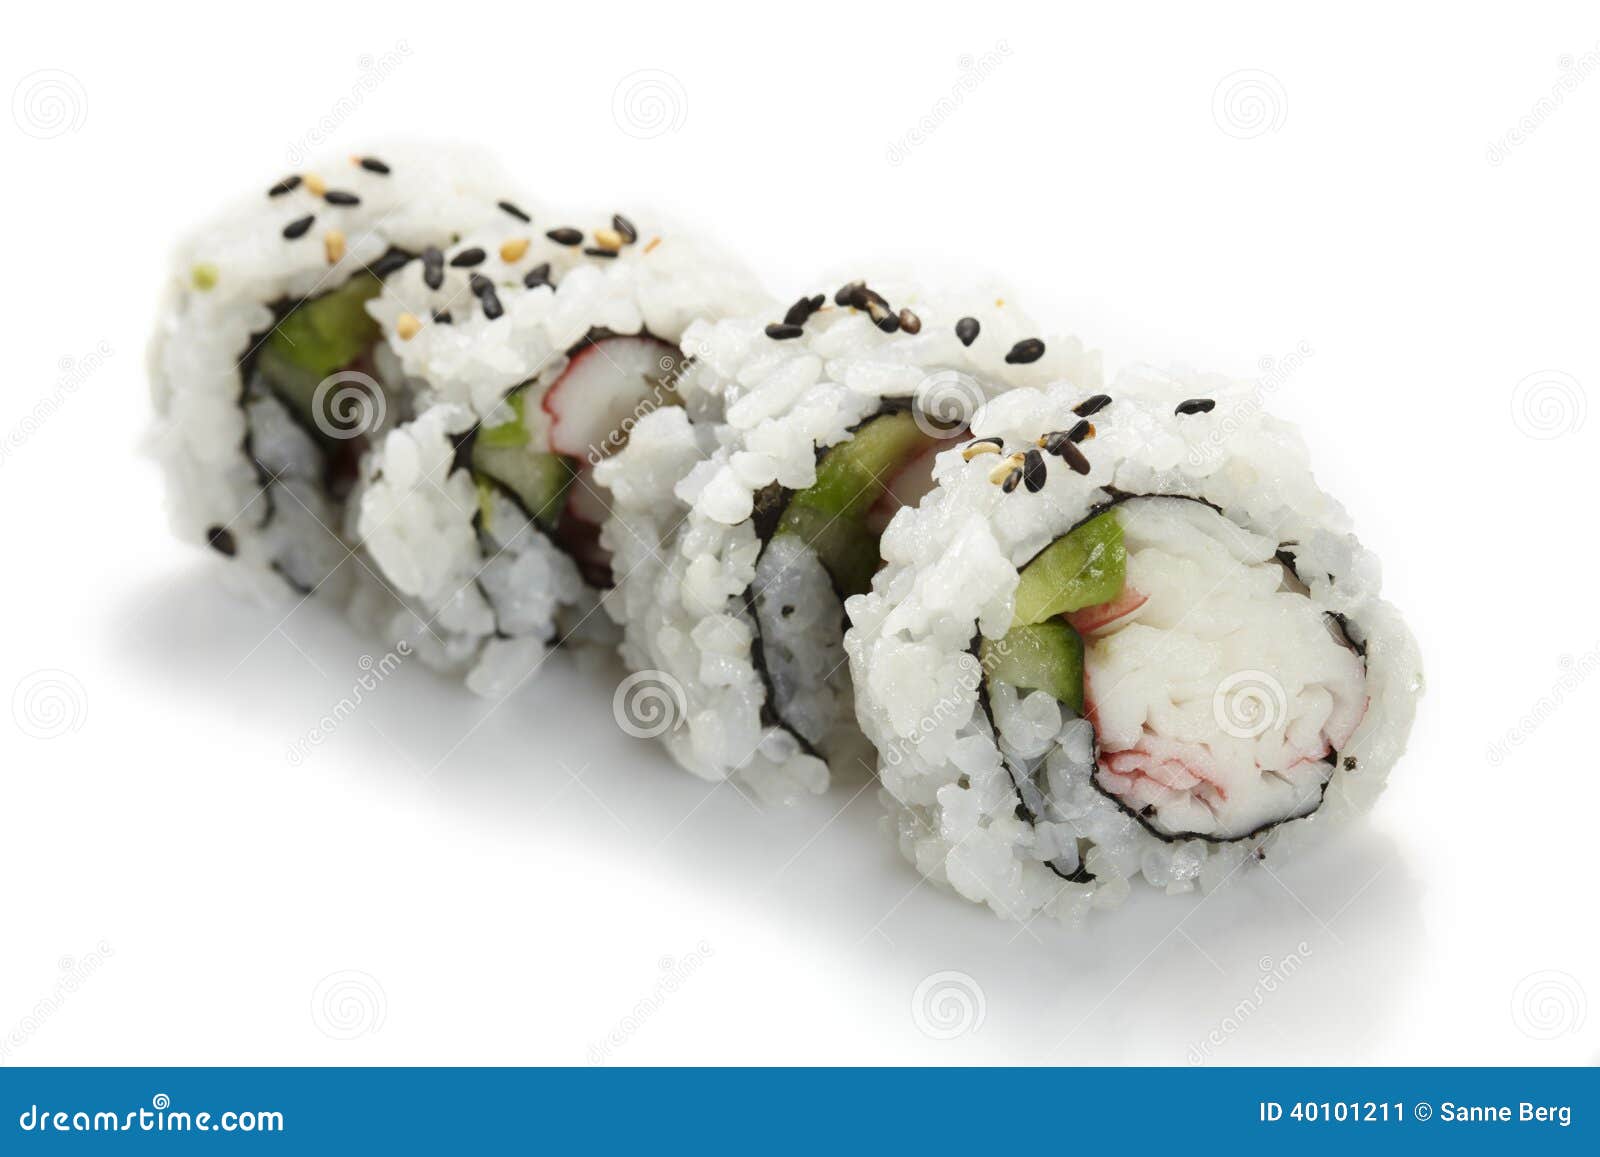 sushi uramaki, inside out, california roll